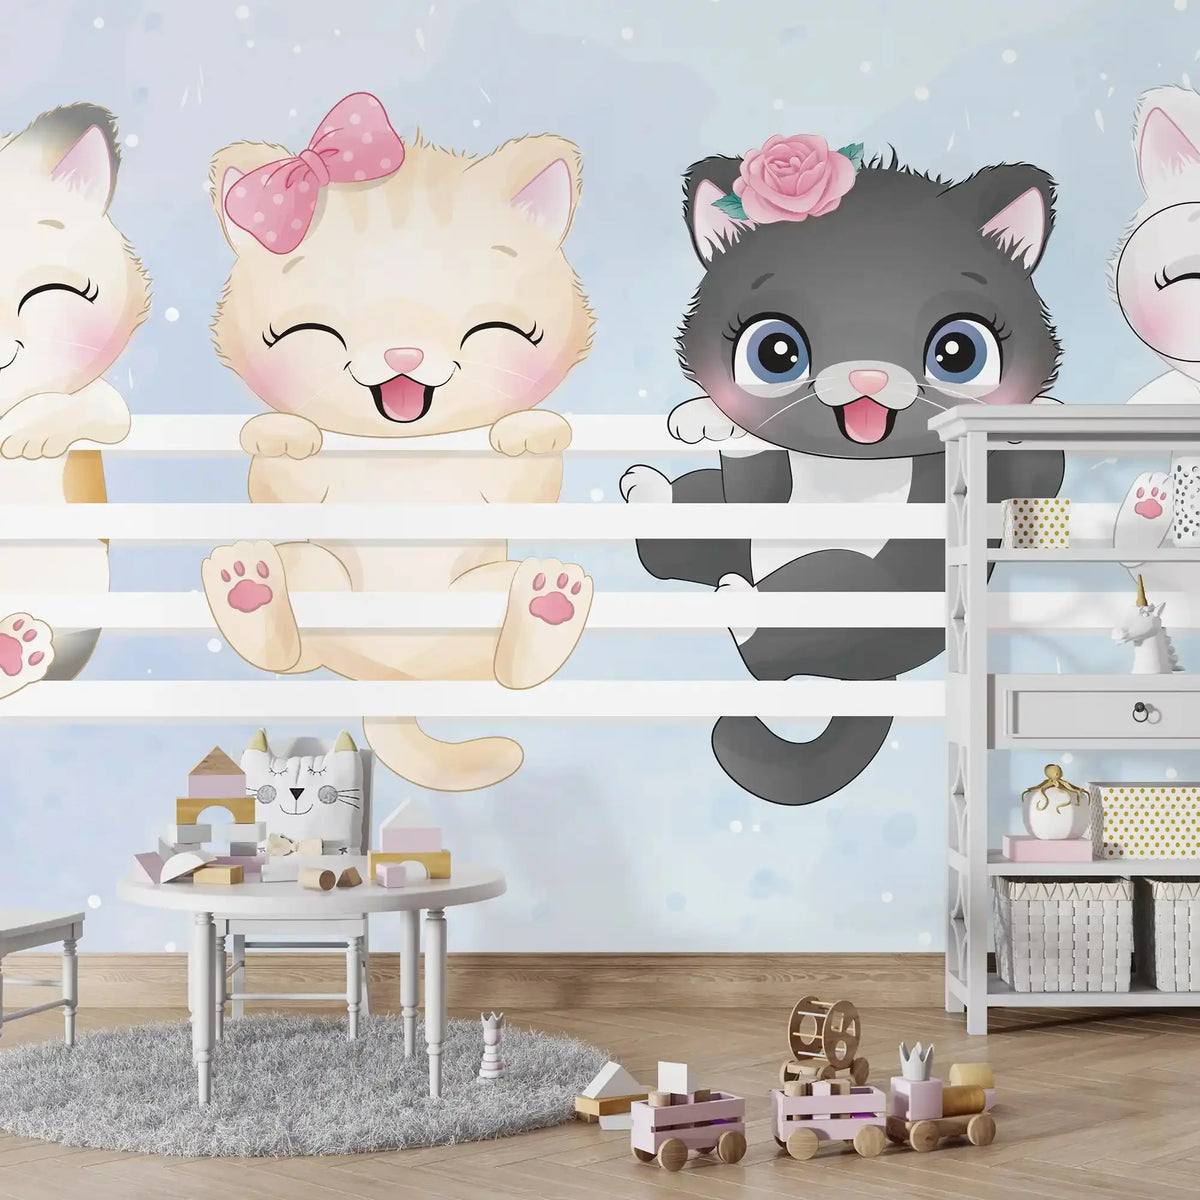 6010 / Adorable Kitten Mural Wallpaper - Self Stick for DIY Nursery Decor, Baby Room Enhancement Decor - Artevella